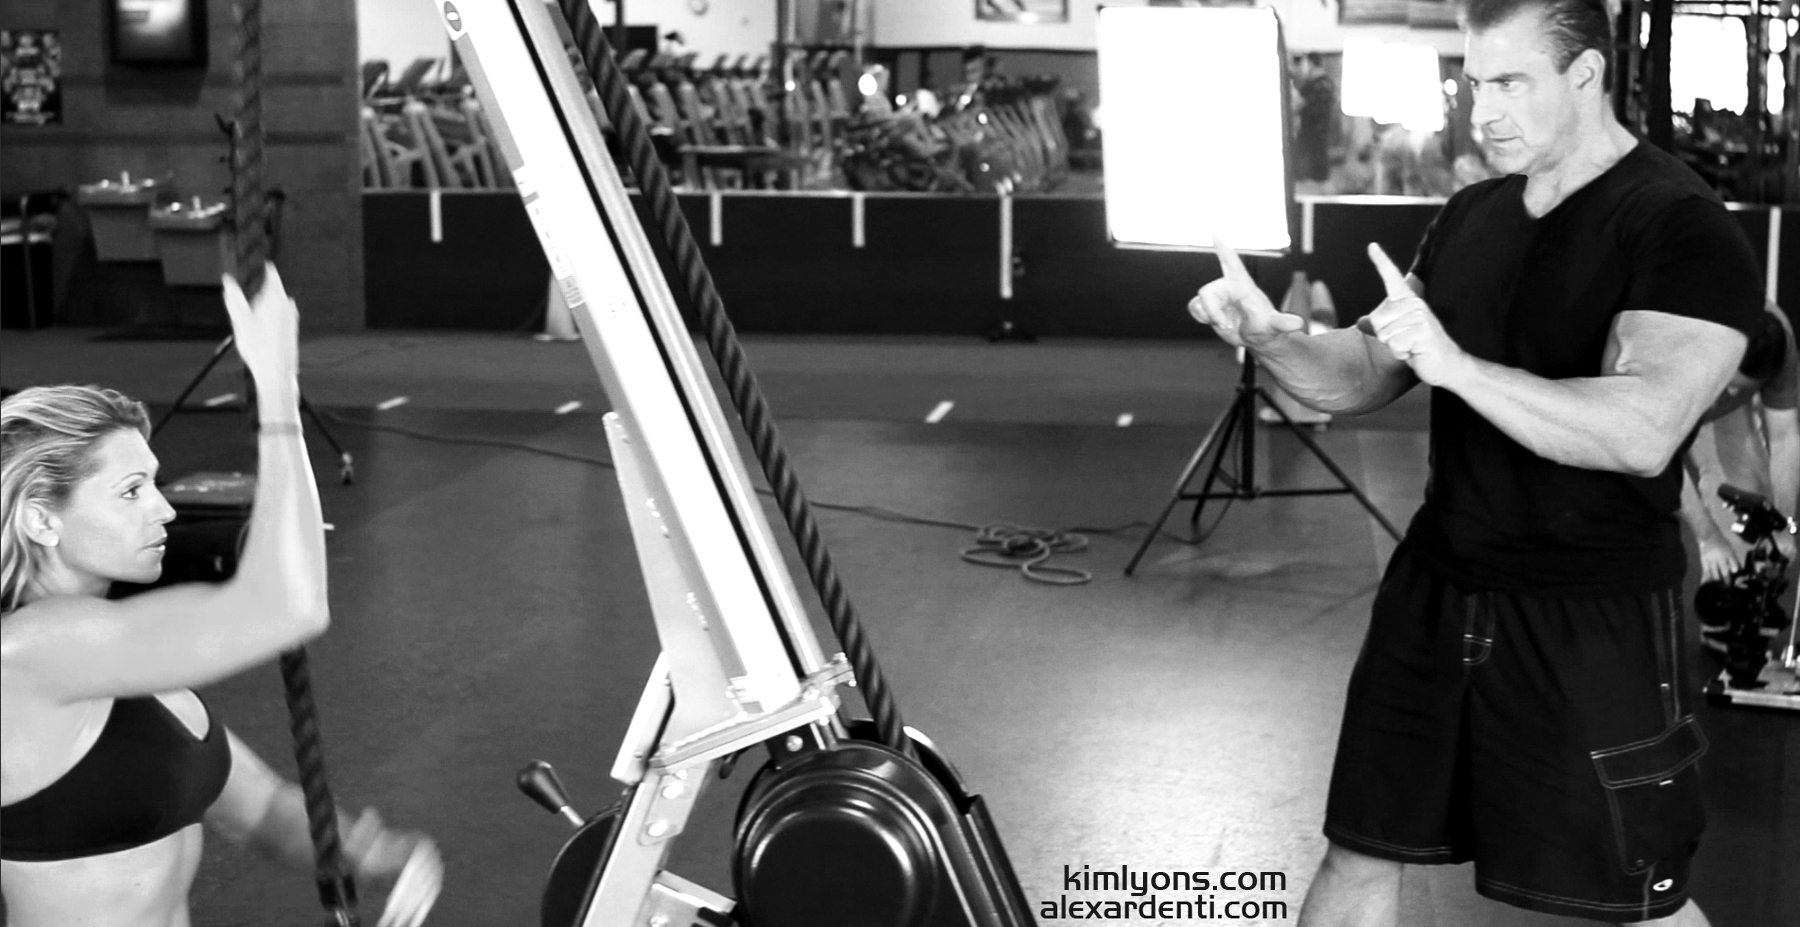 Alex Ardenti on the set with Kim Lyons' UFC Gym commercial spot for Ardenti Films